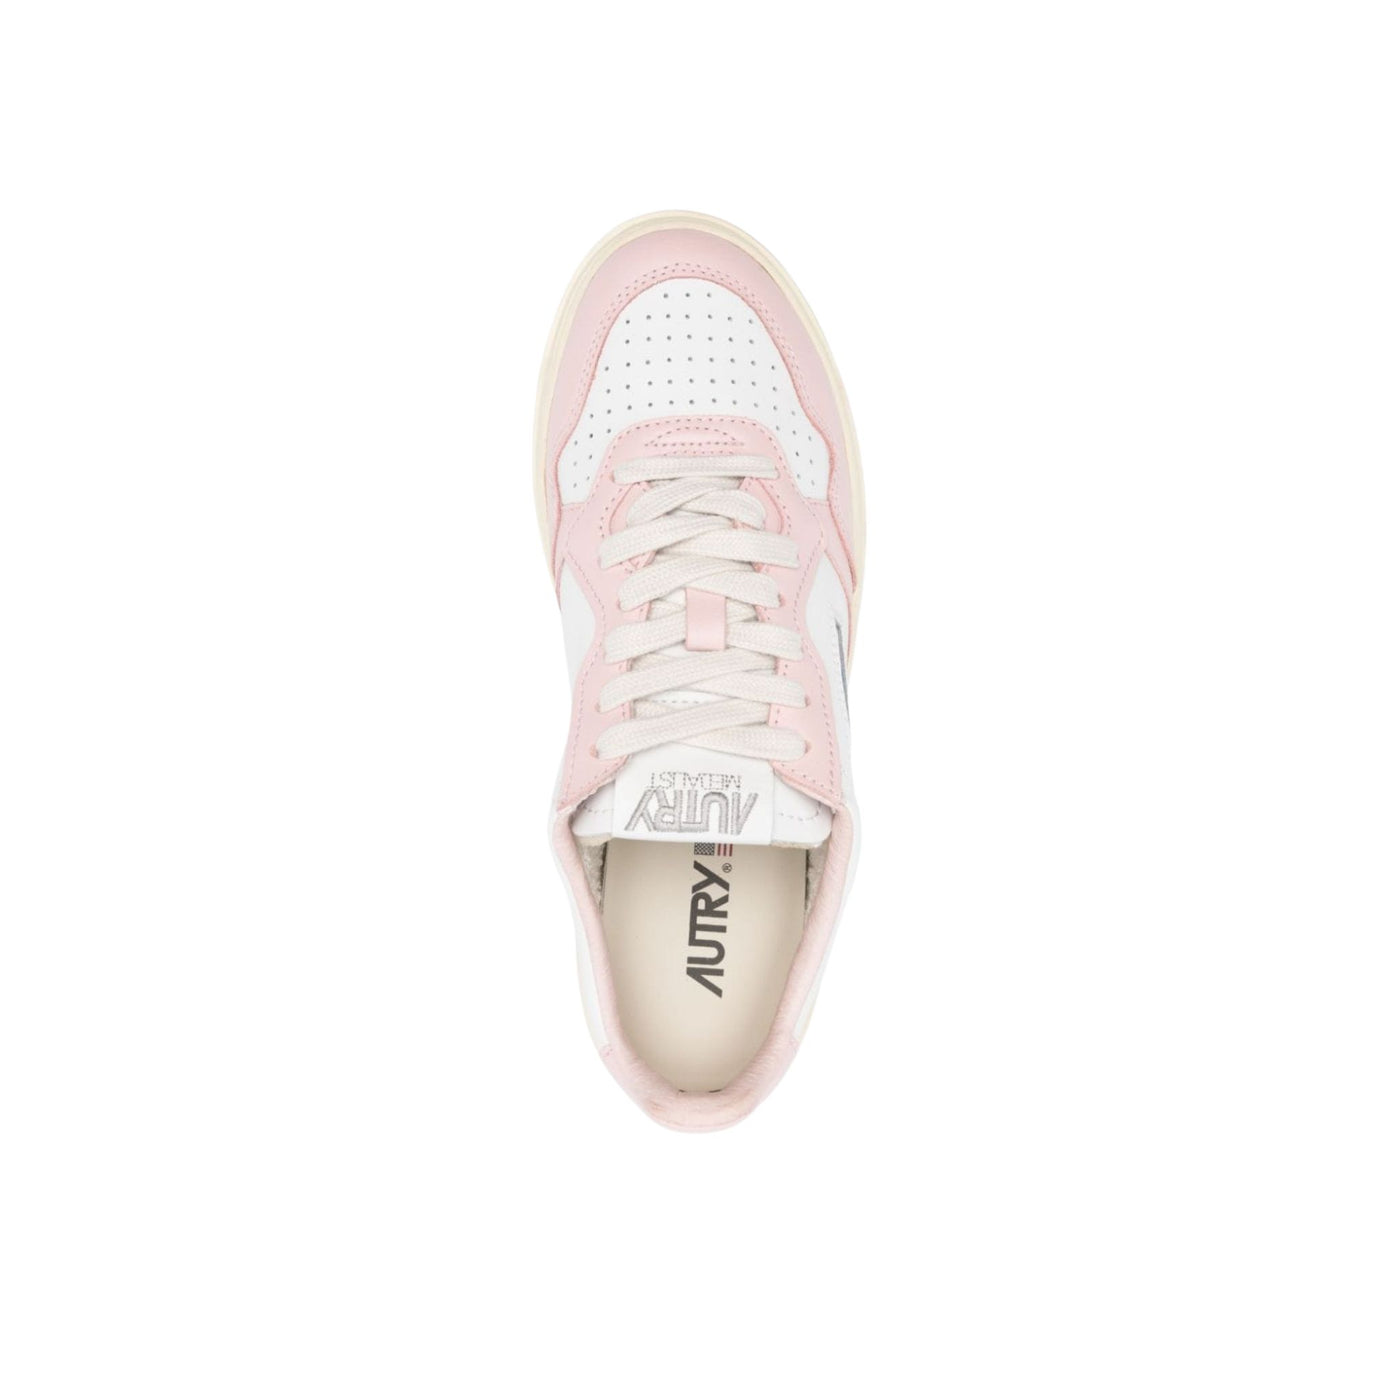 Sneakers Donna in pelle Bianco e Rosa